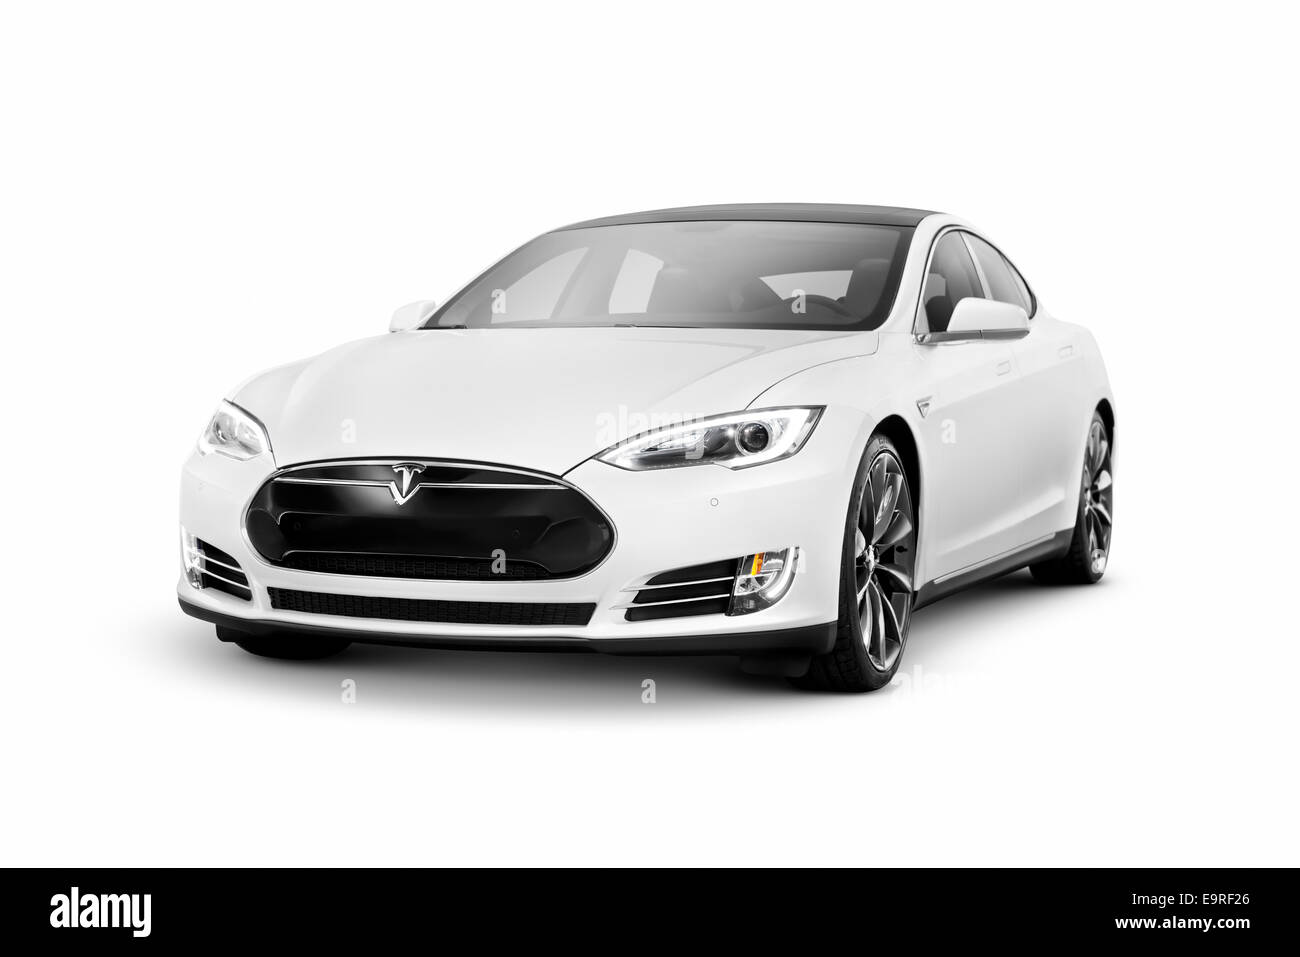 https://c8.alamy.com/comp/E9RF26/license-and-prints-at-maximimagescom-tesla-luxury-electric-car-automotive-E9RF26.jpg